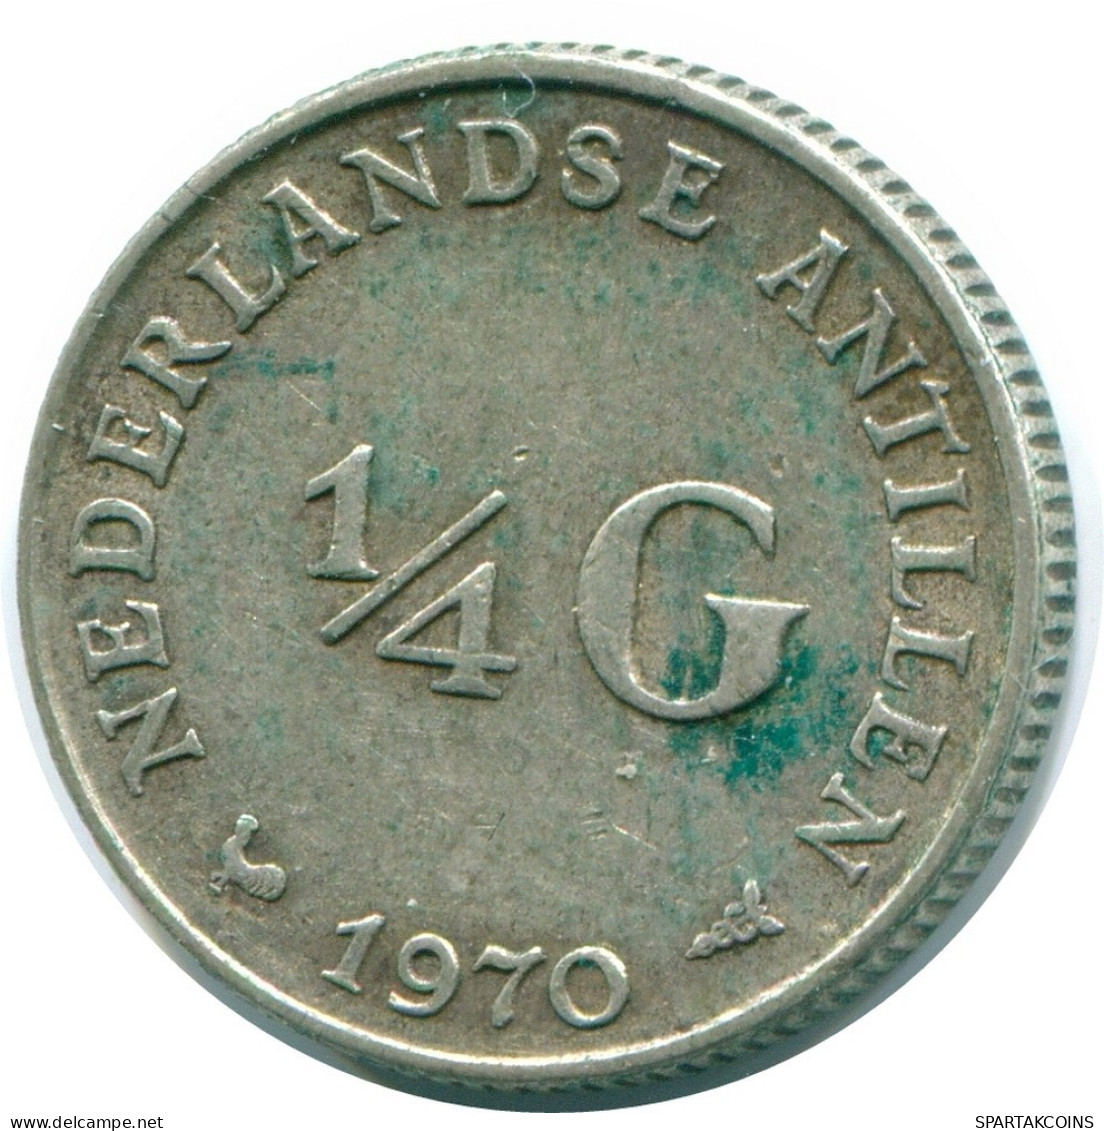 1/4 GULDEN 1970 ANTILLAS NEERLANDESAS PLATA Colonial Moneda #NL11656.4.E.A - Netherlands Antilles